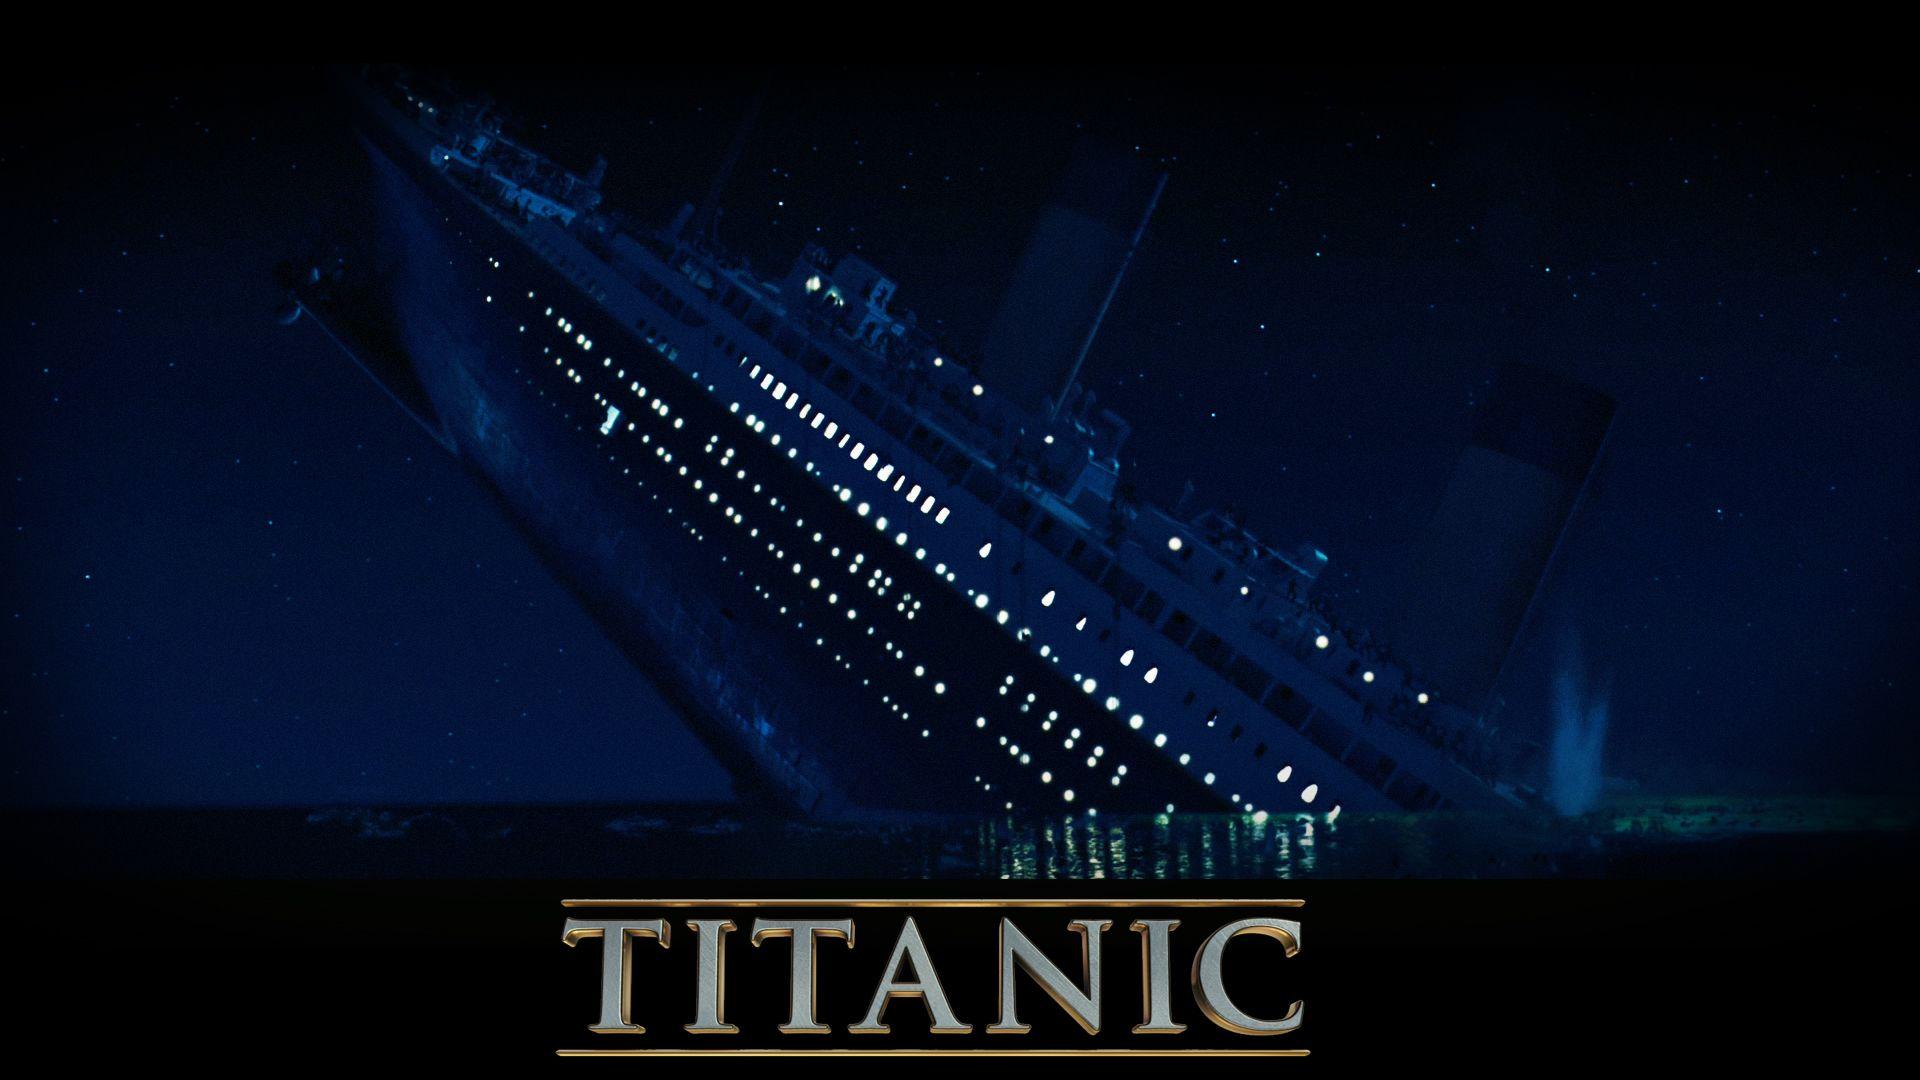 Titanic Ship Wreck 3D Movie Image Gallery Wallpaper 1920×1080